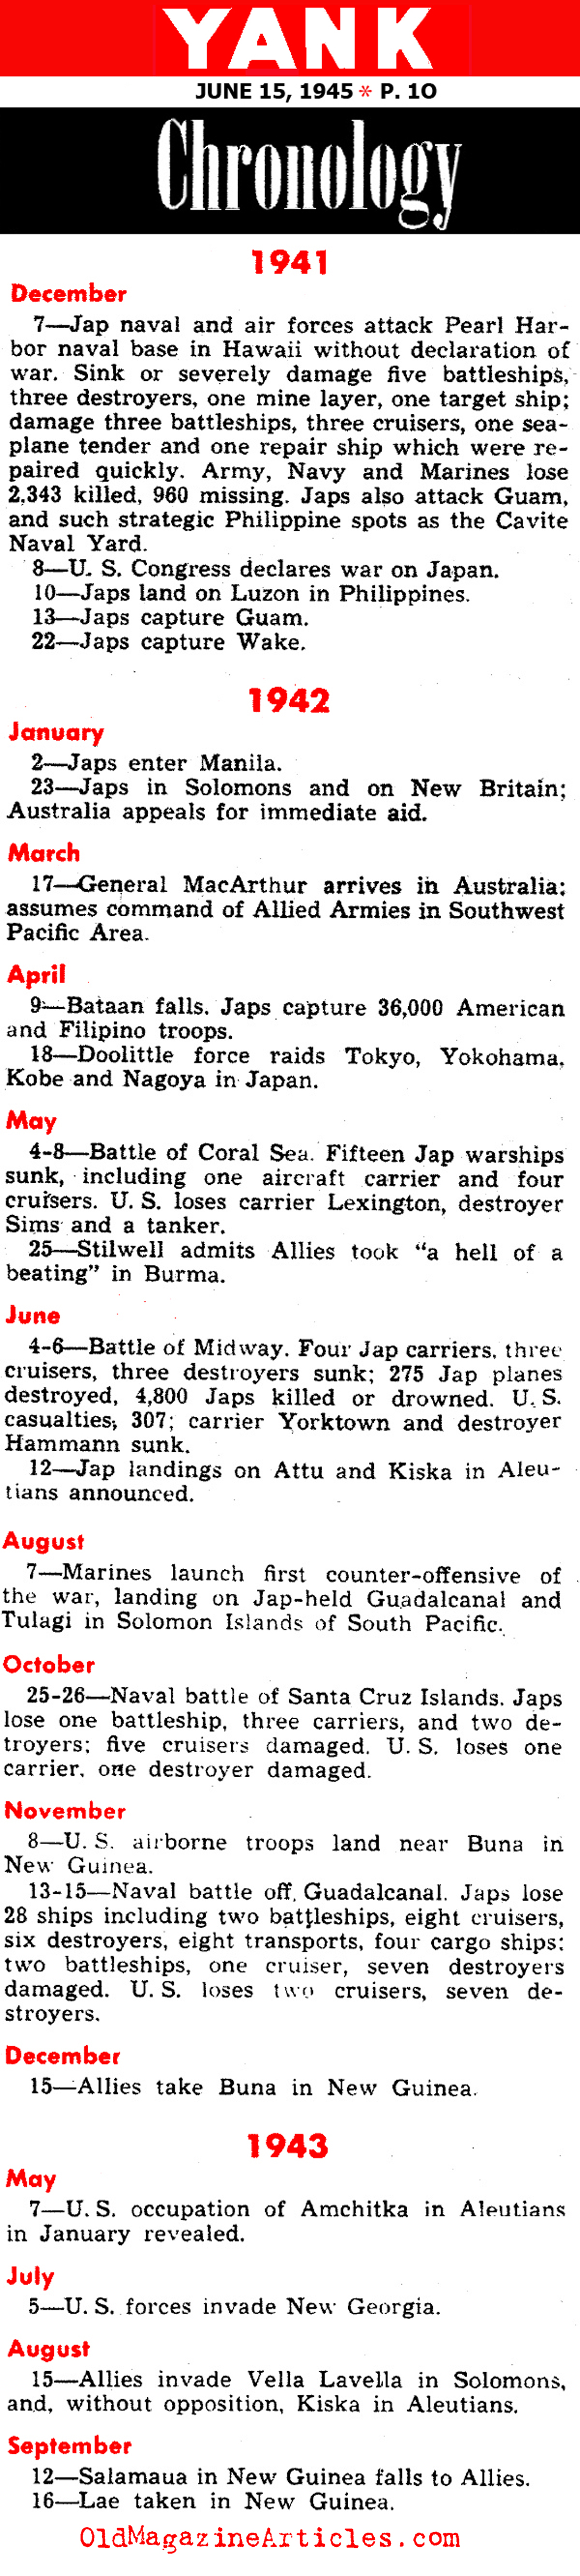 A Pacific War Chronology (Yank Magazine, 1945)